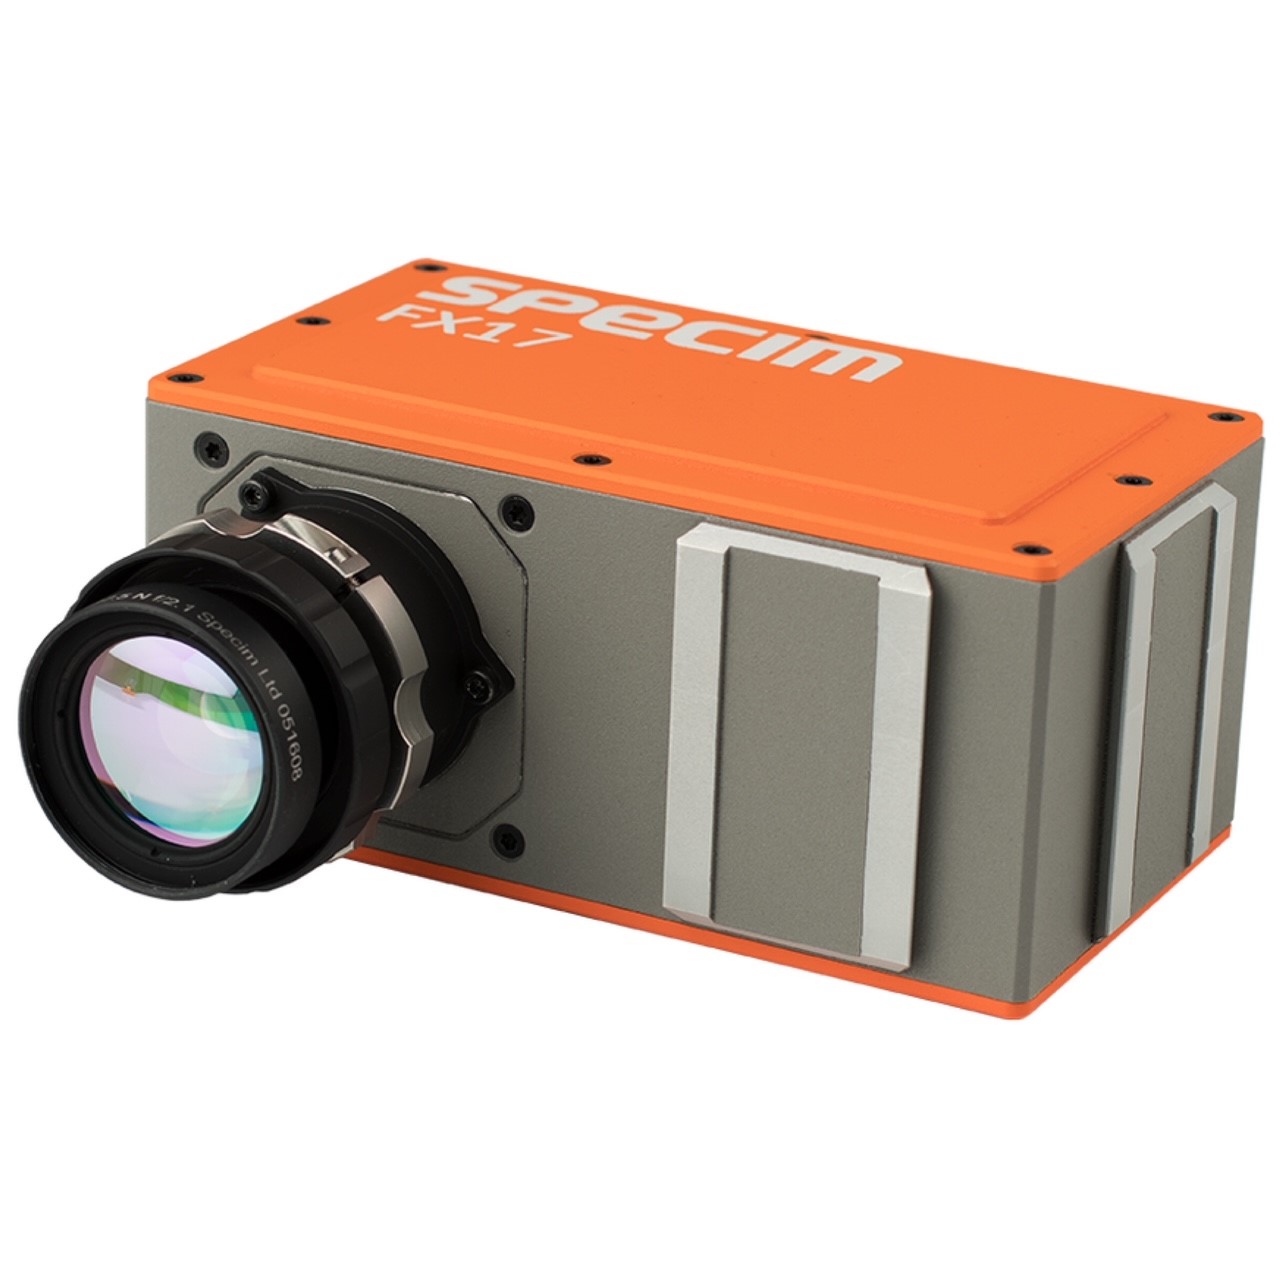 Specim FX17e NIR Hyperspectral Imaging System